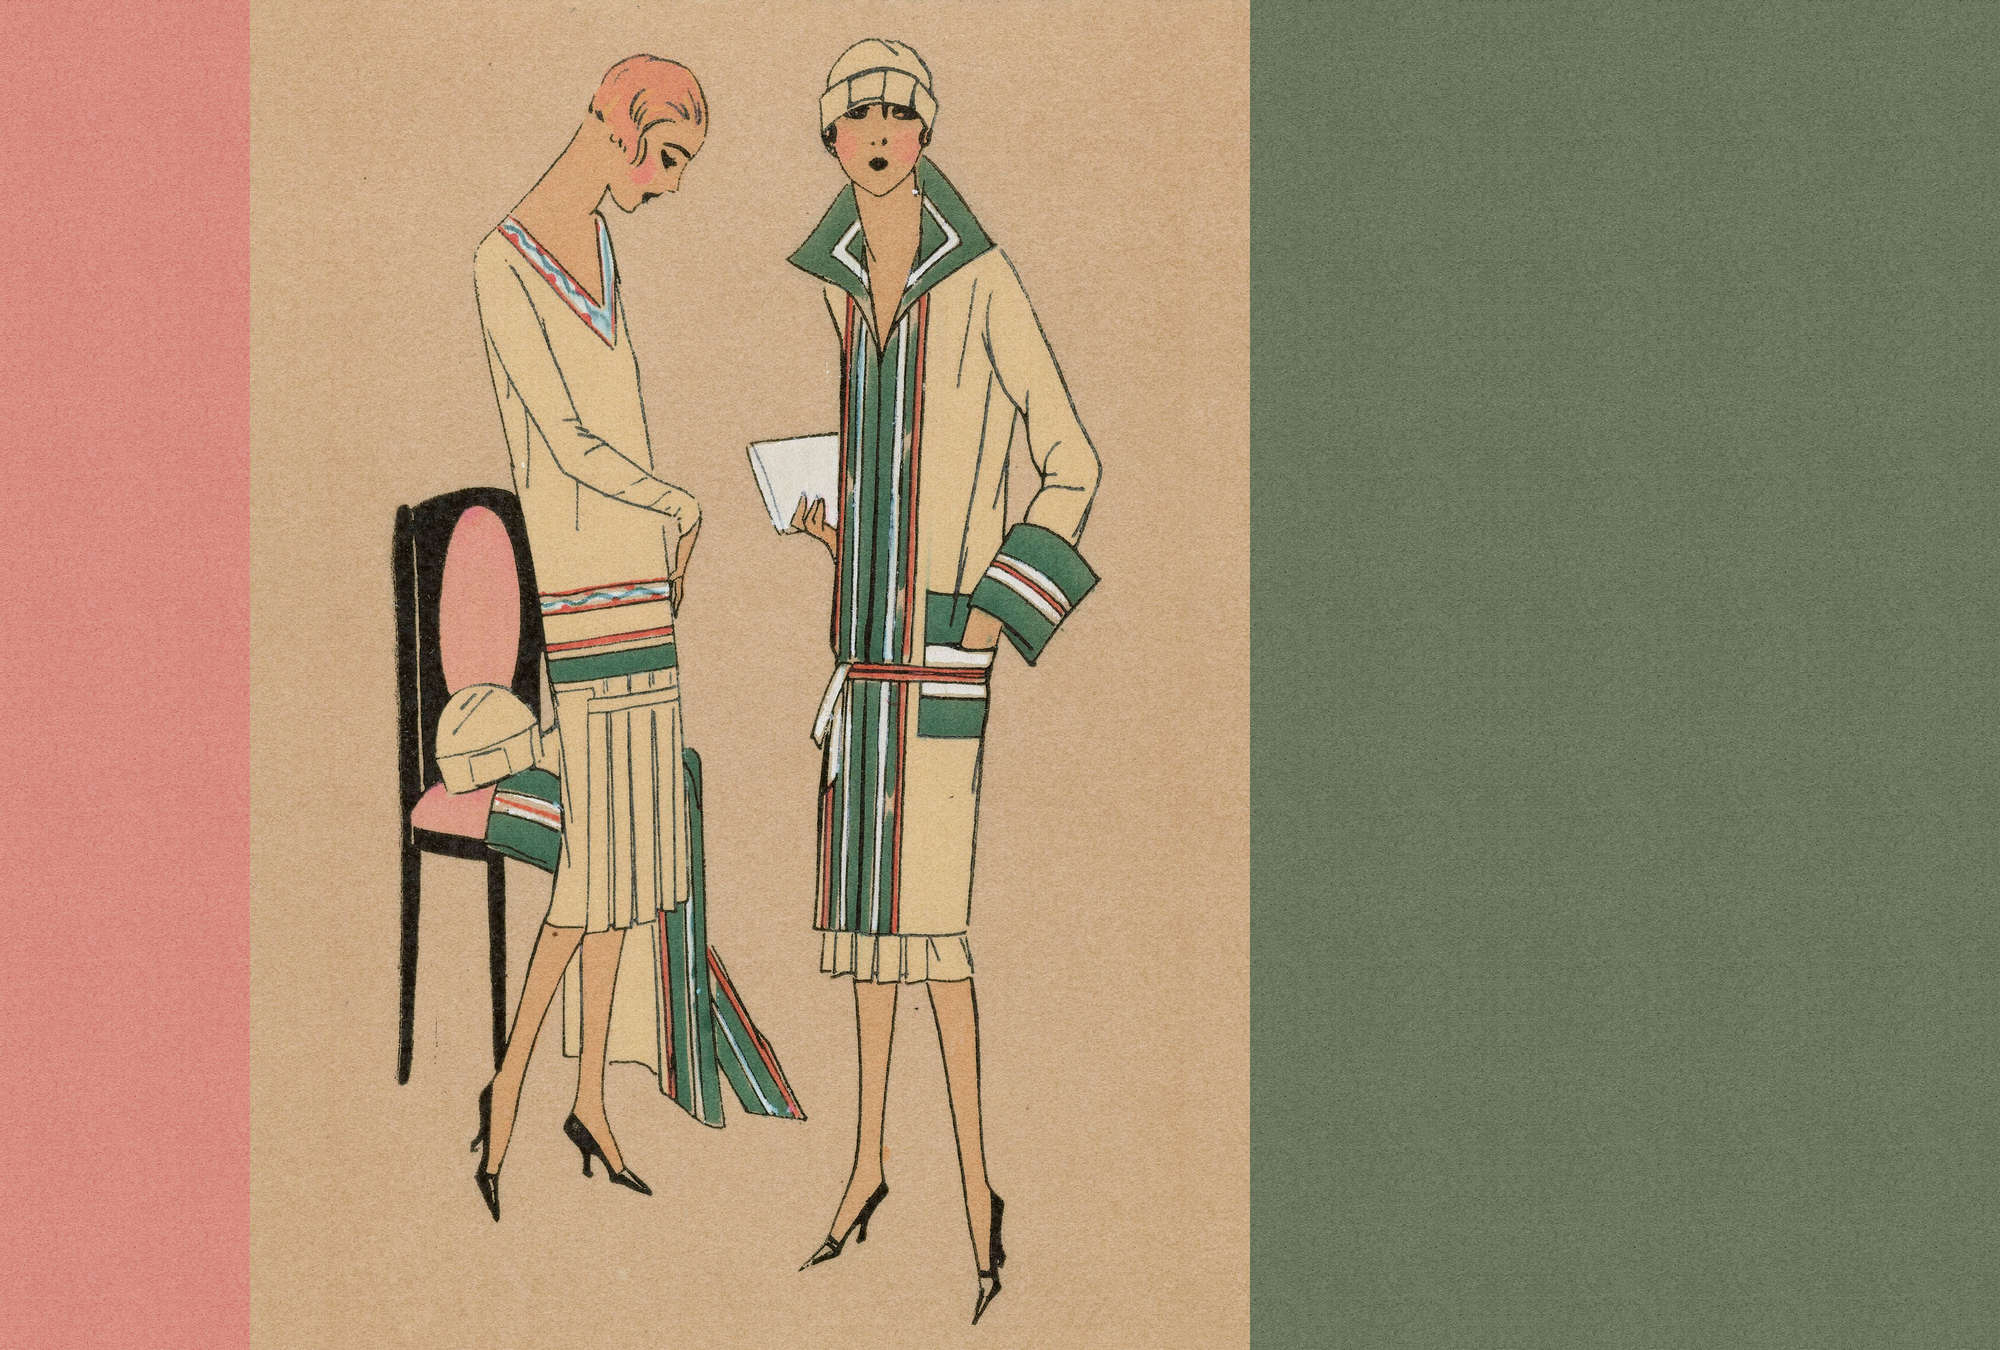             Parisienne 1 - photo wallpaper art print clothing Twentiers Style
        